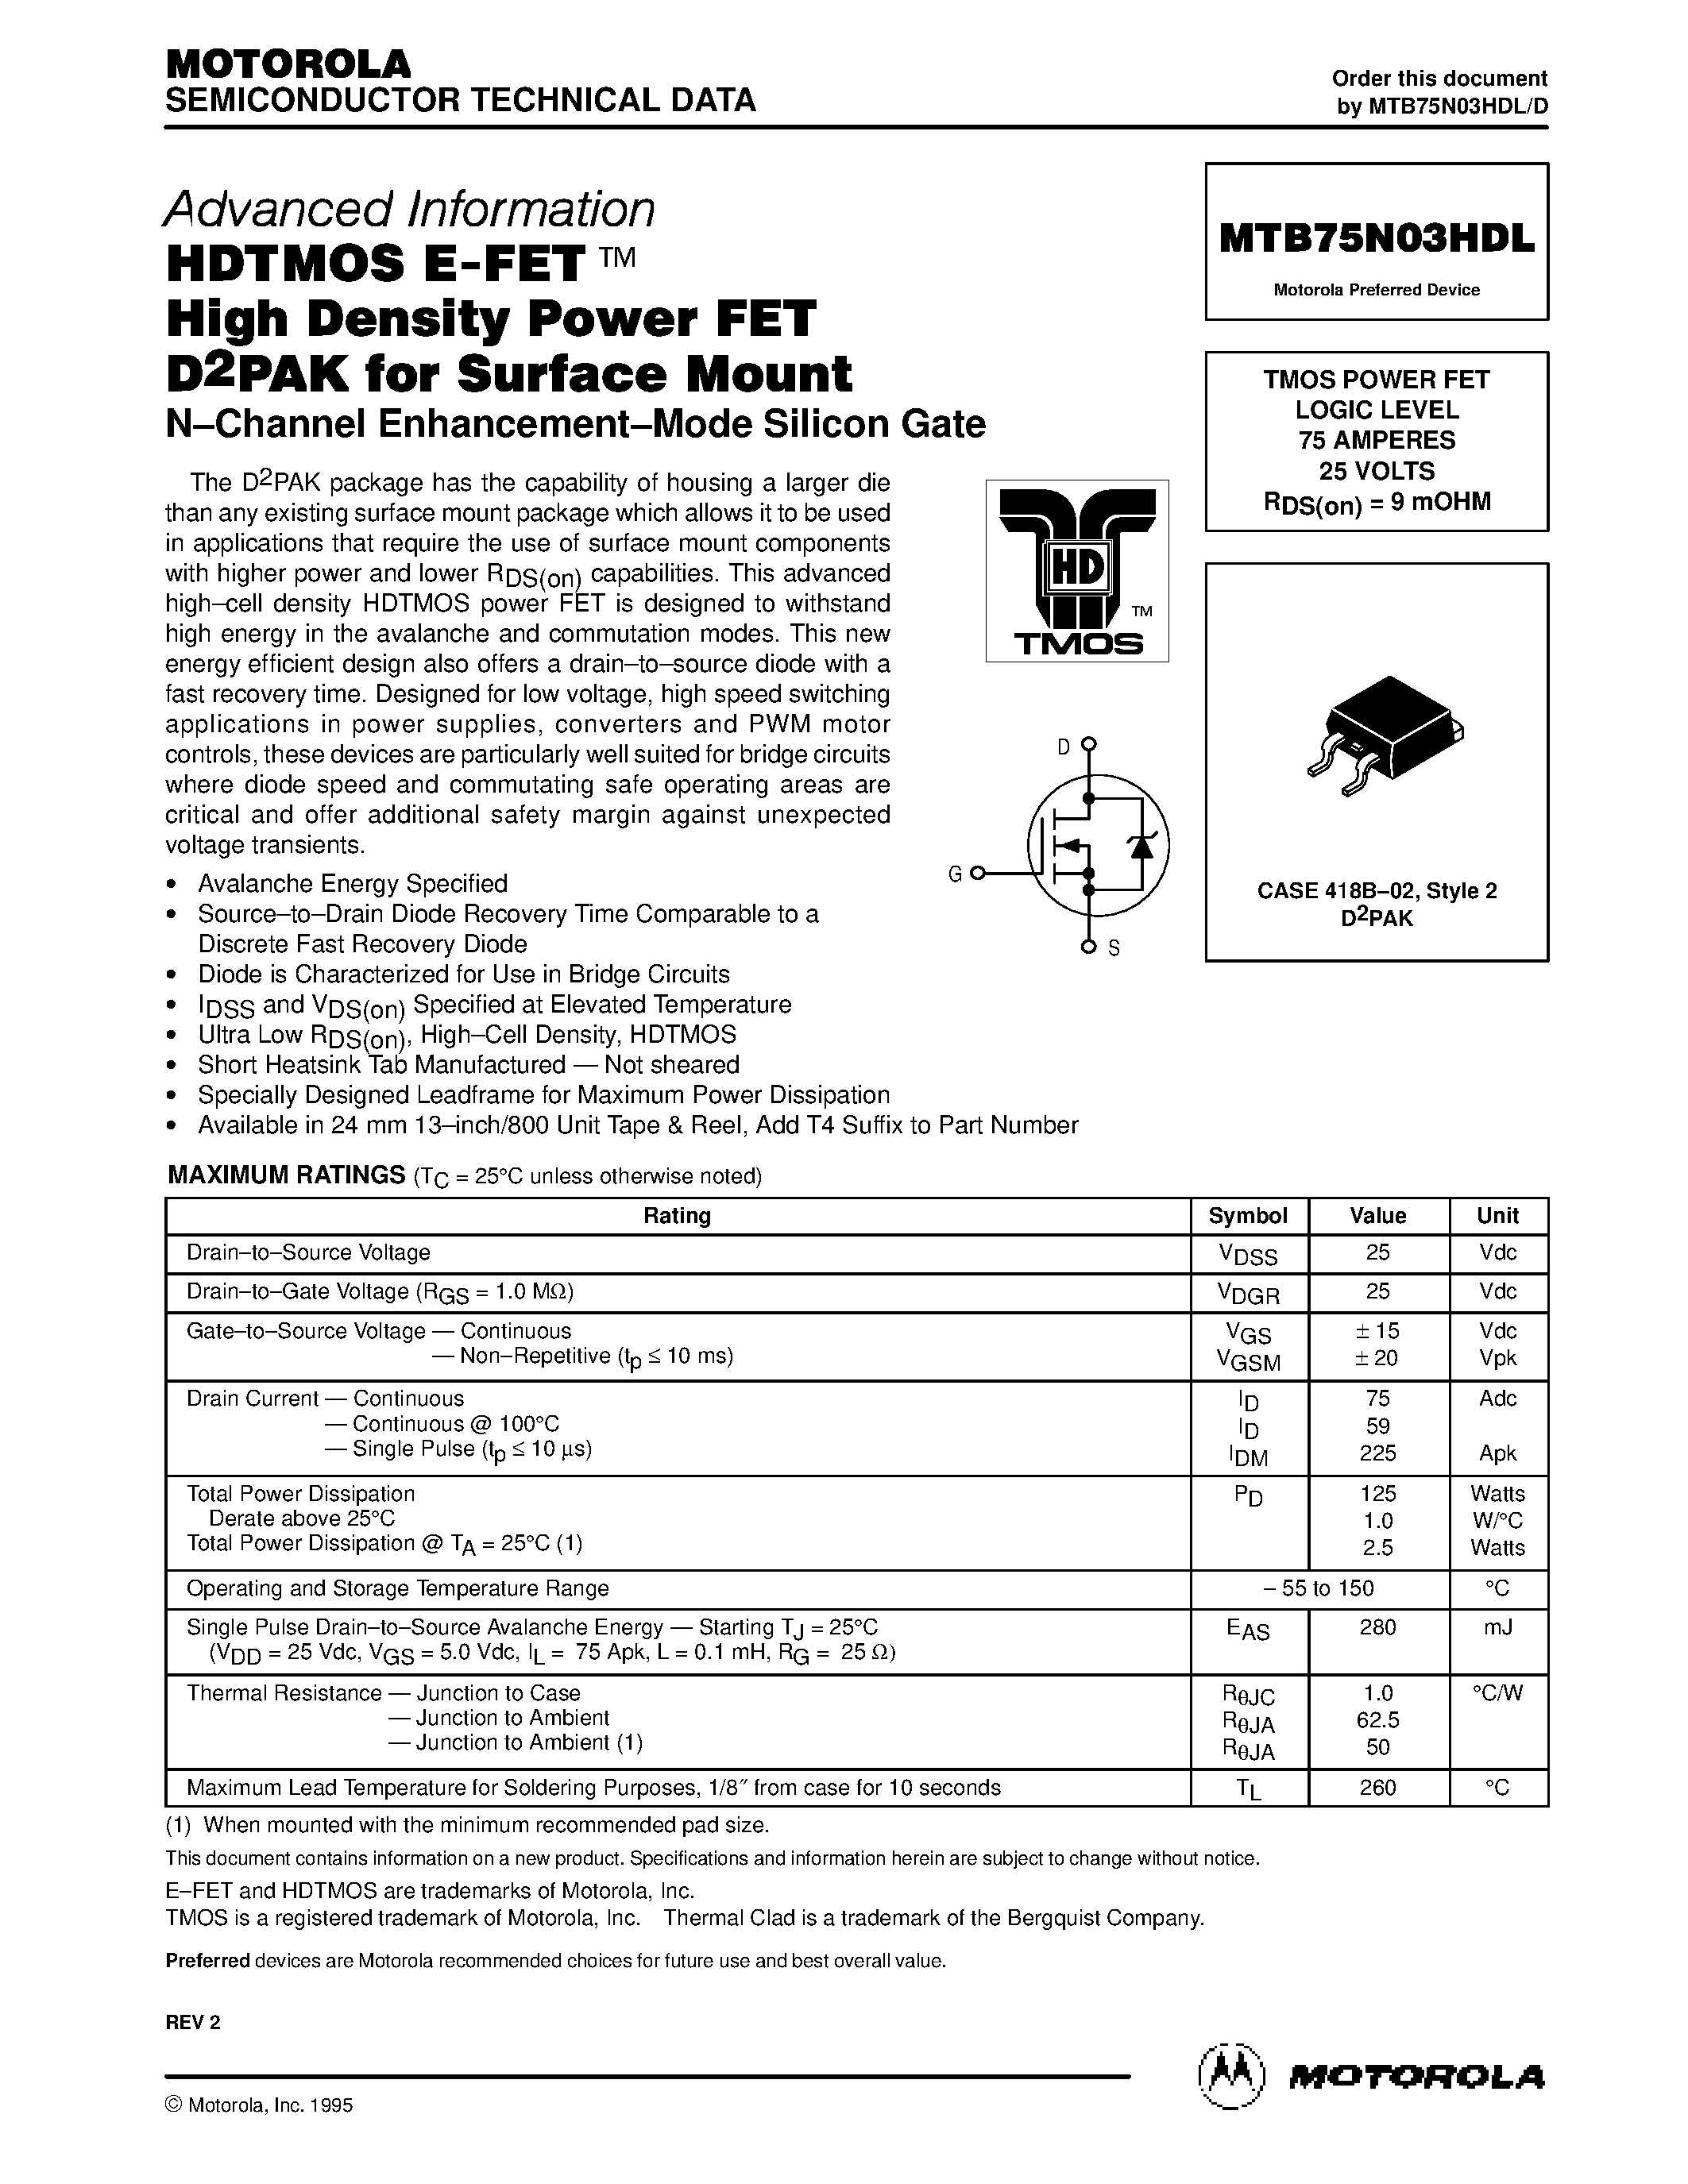 Даташит MTB75N03HDL - TMOS POWER FET LOGIC LEVEL 75 AMPERES 25 VOLTS страница 1